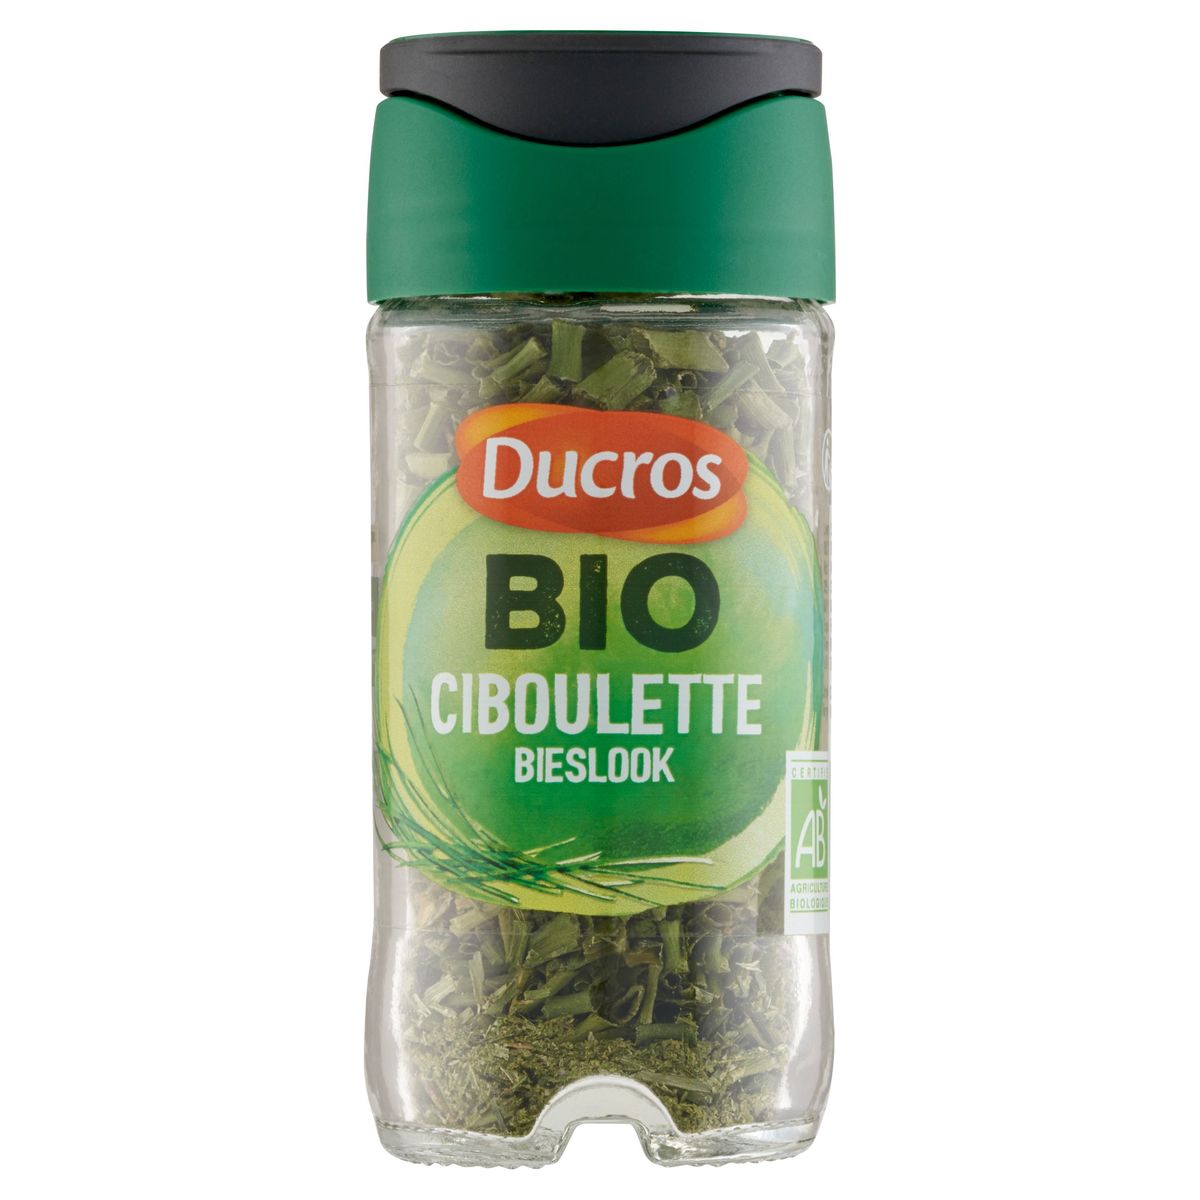 Ducros Bio Ciboulette 4 g